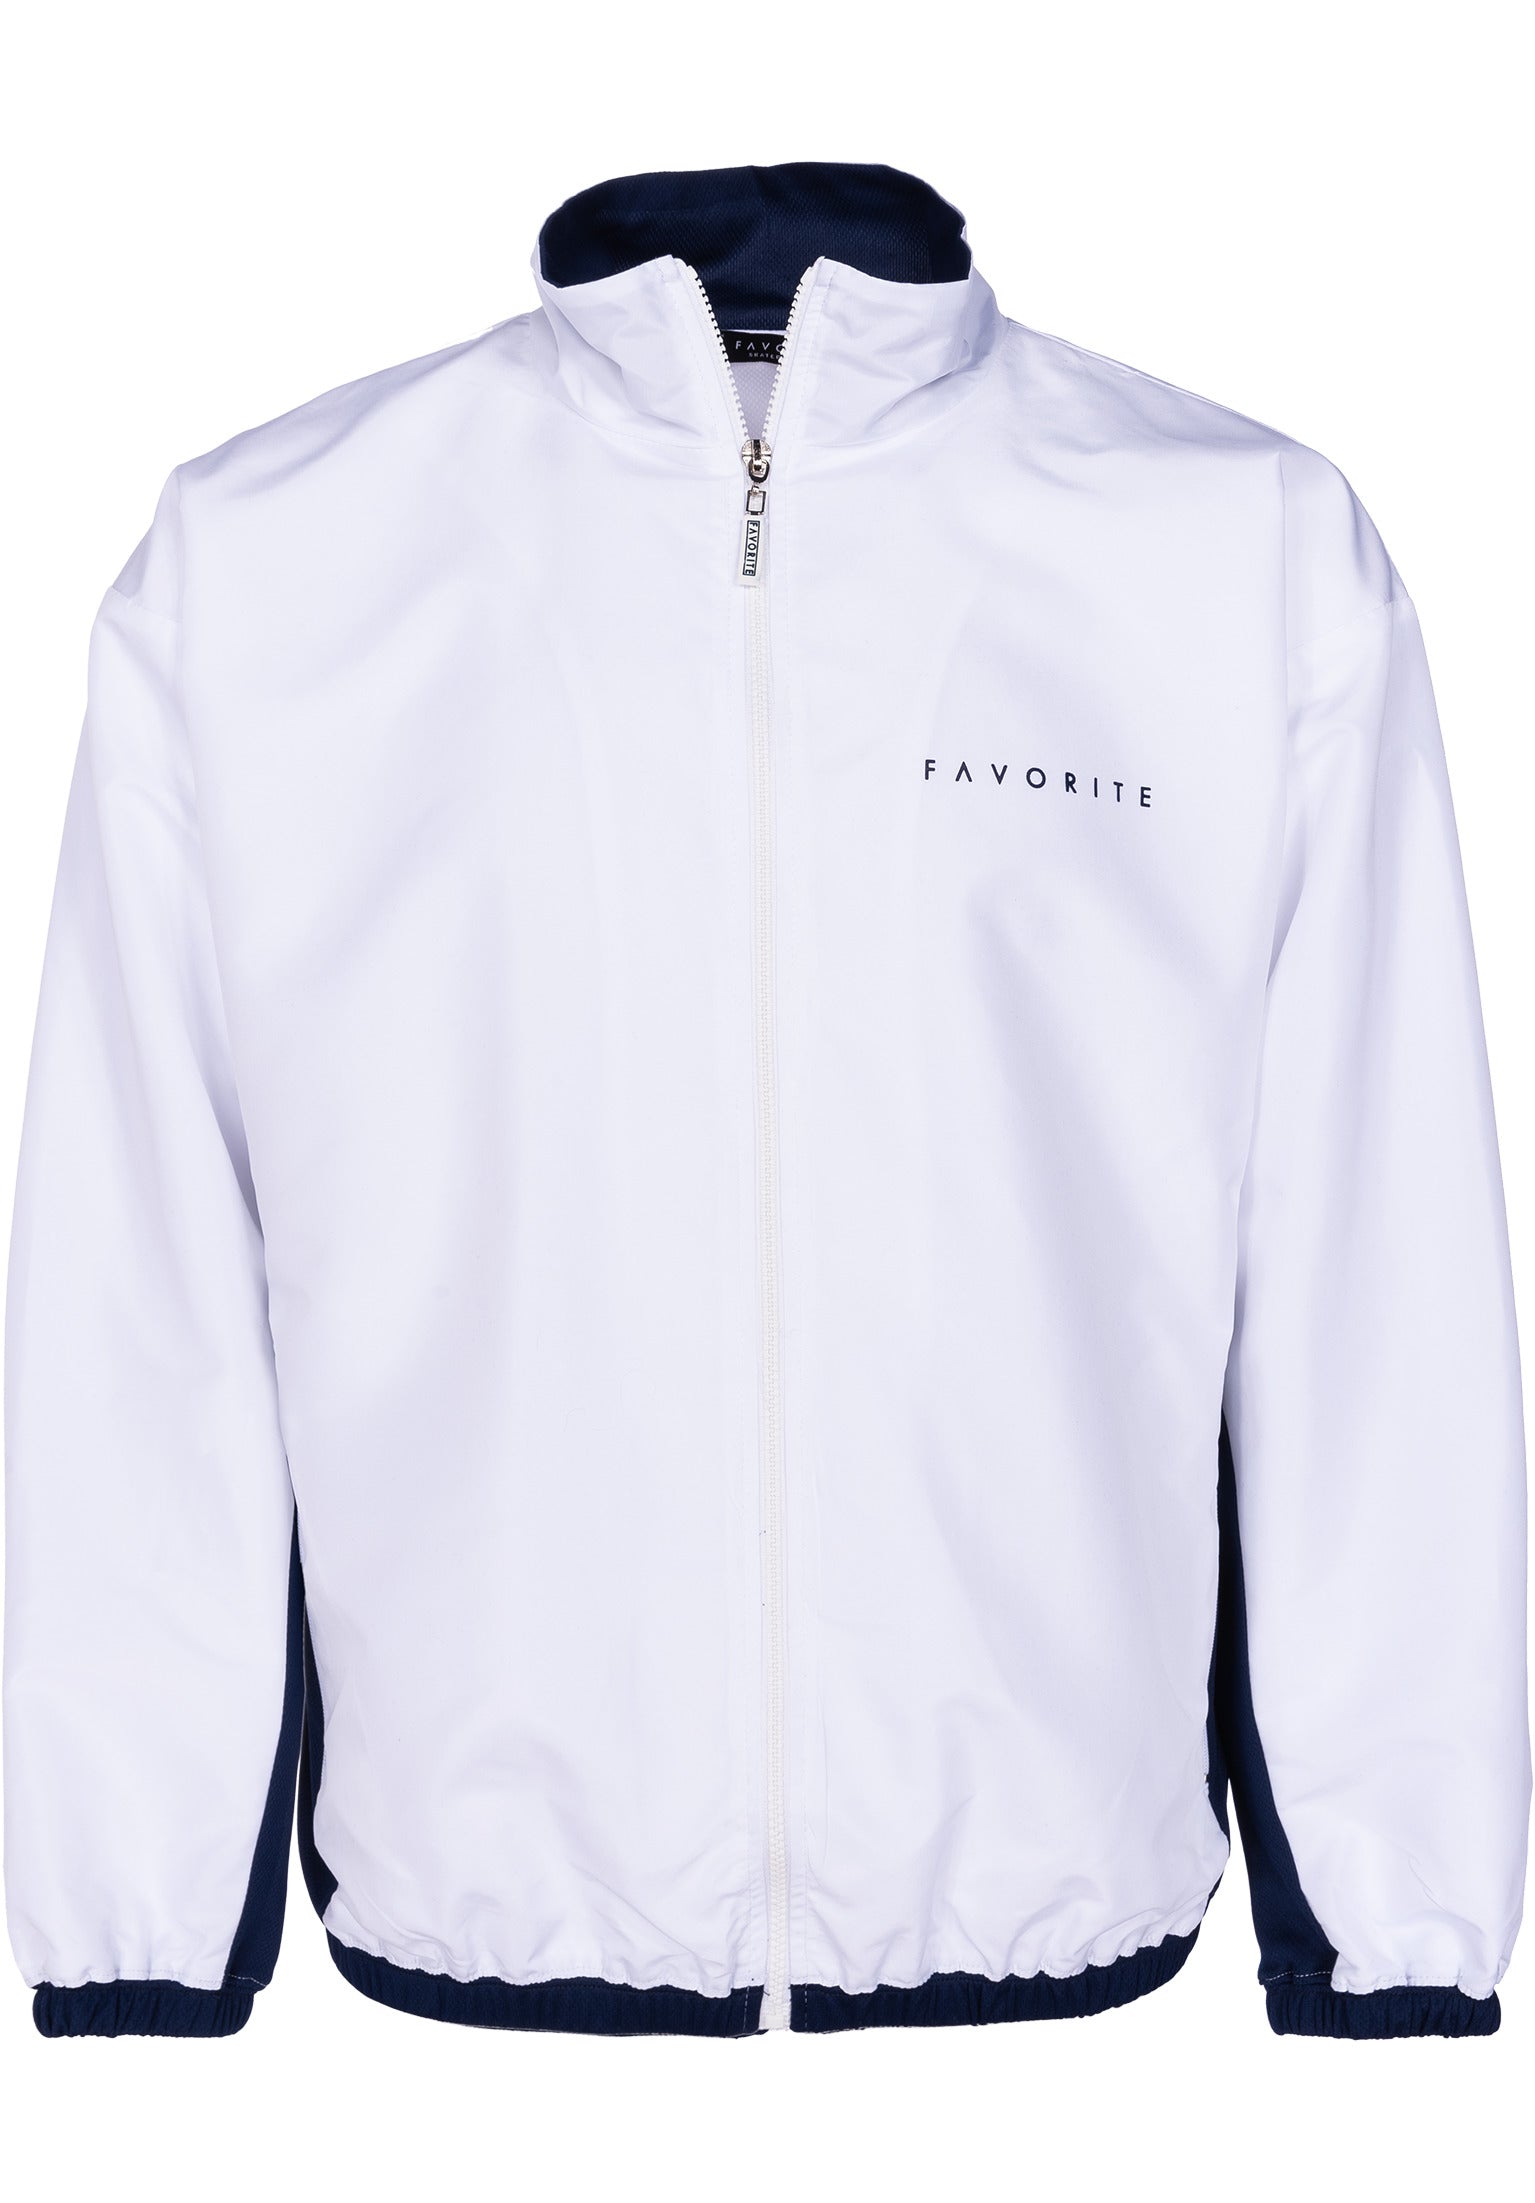 Track jacket - White/Navy blue - Ladies | H&M IN